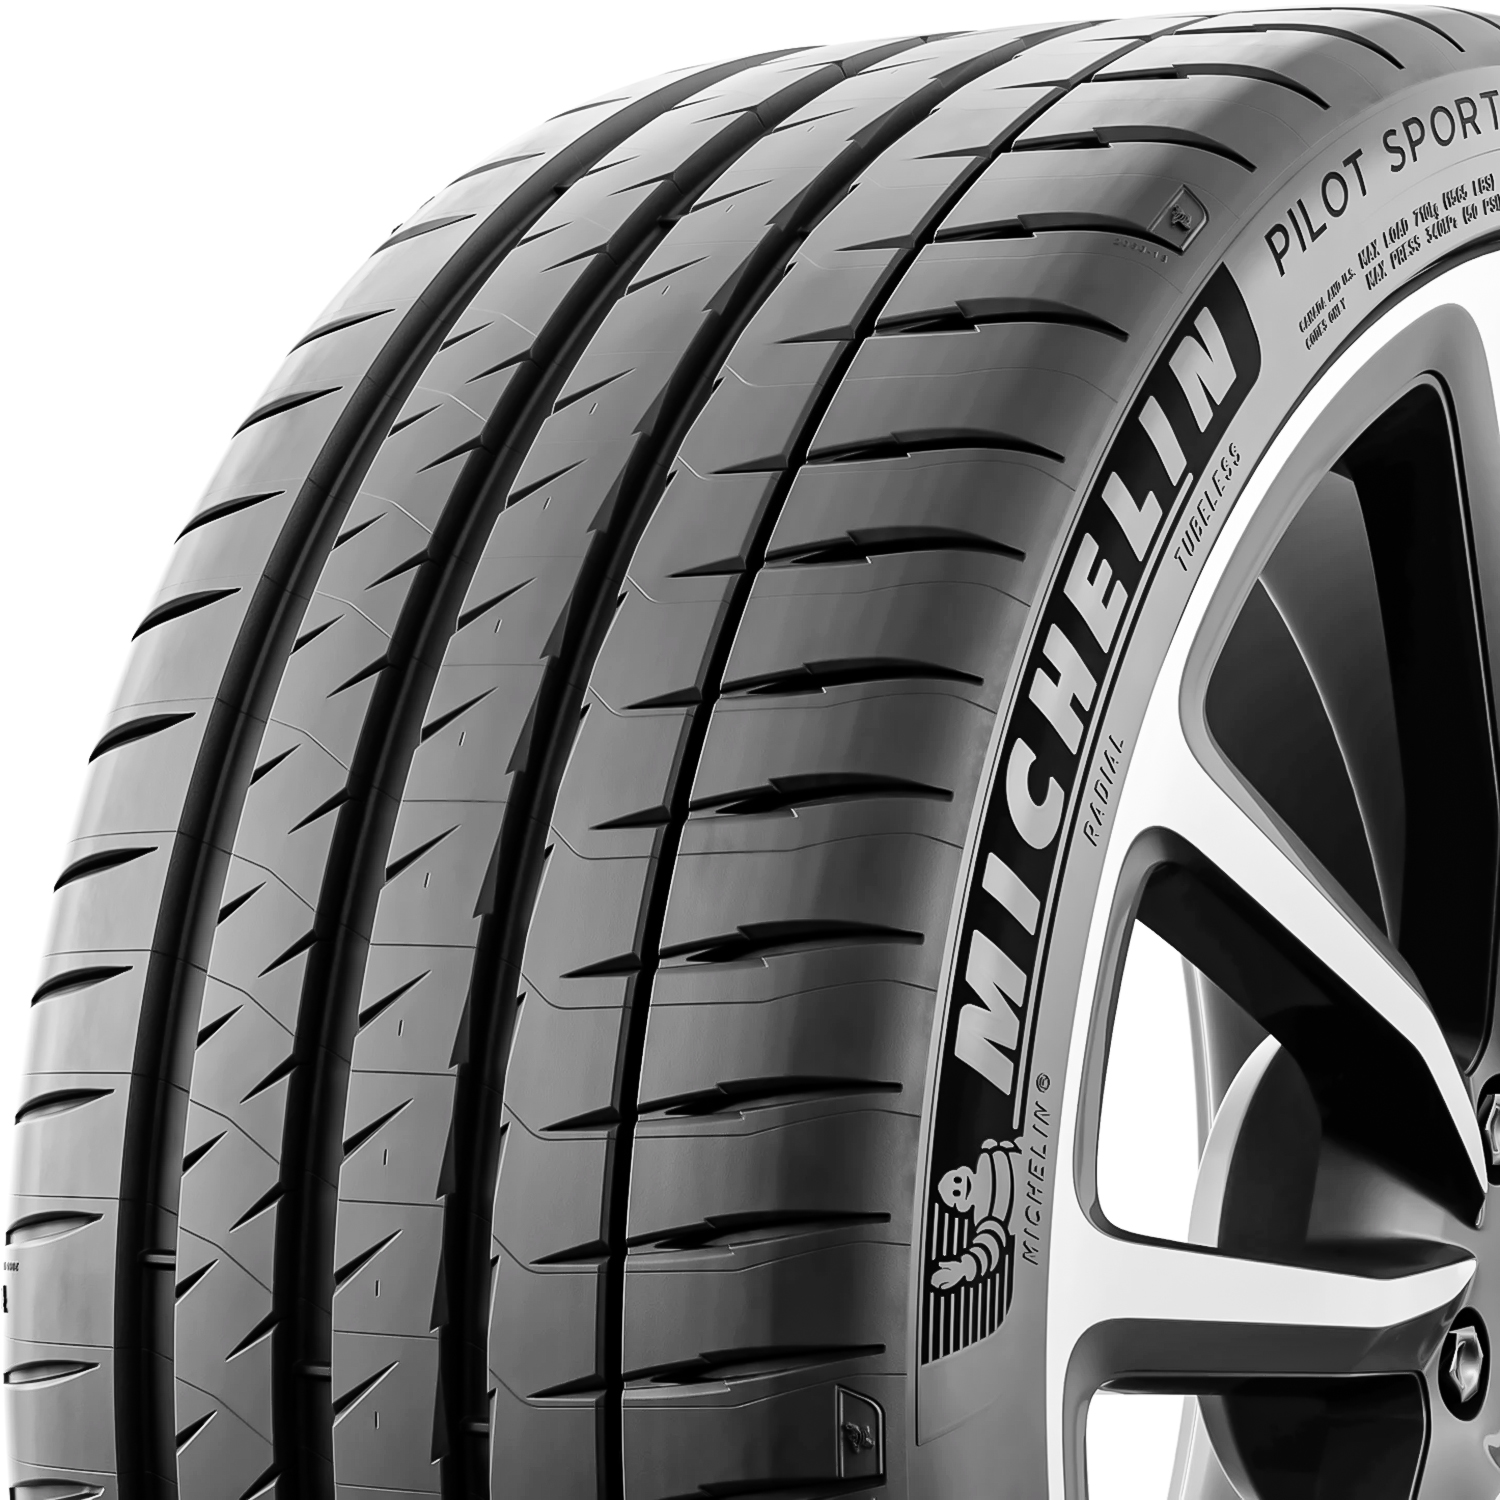 Michelin Pilot Sport 4S Performance 215/45ZR17 (91Y) XL Passenger Tire - image 2 of 8